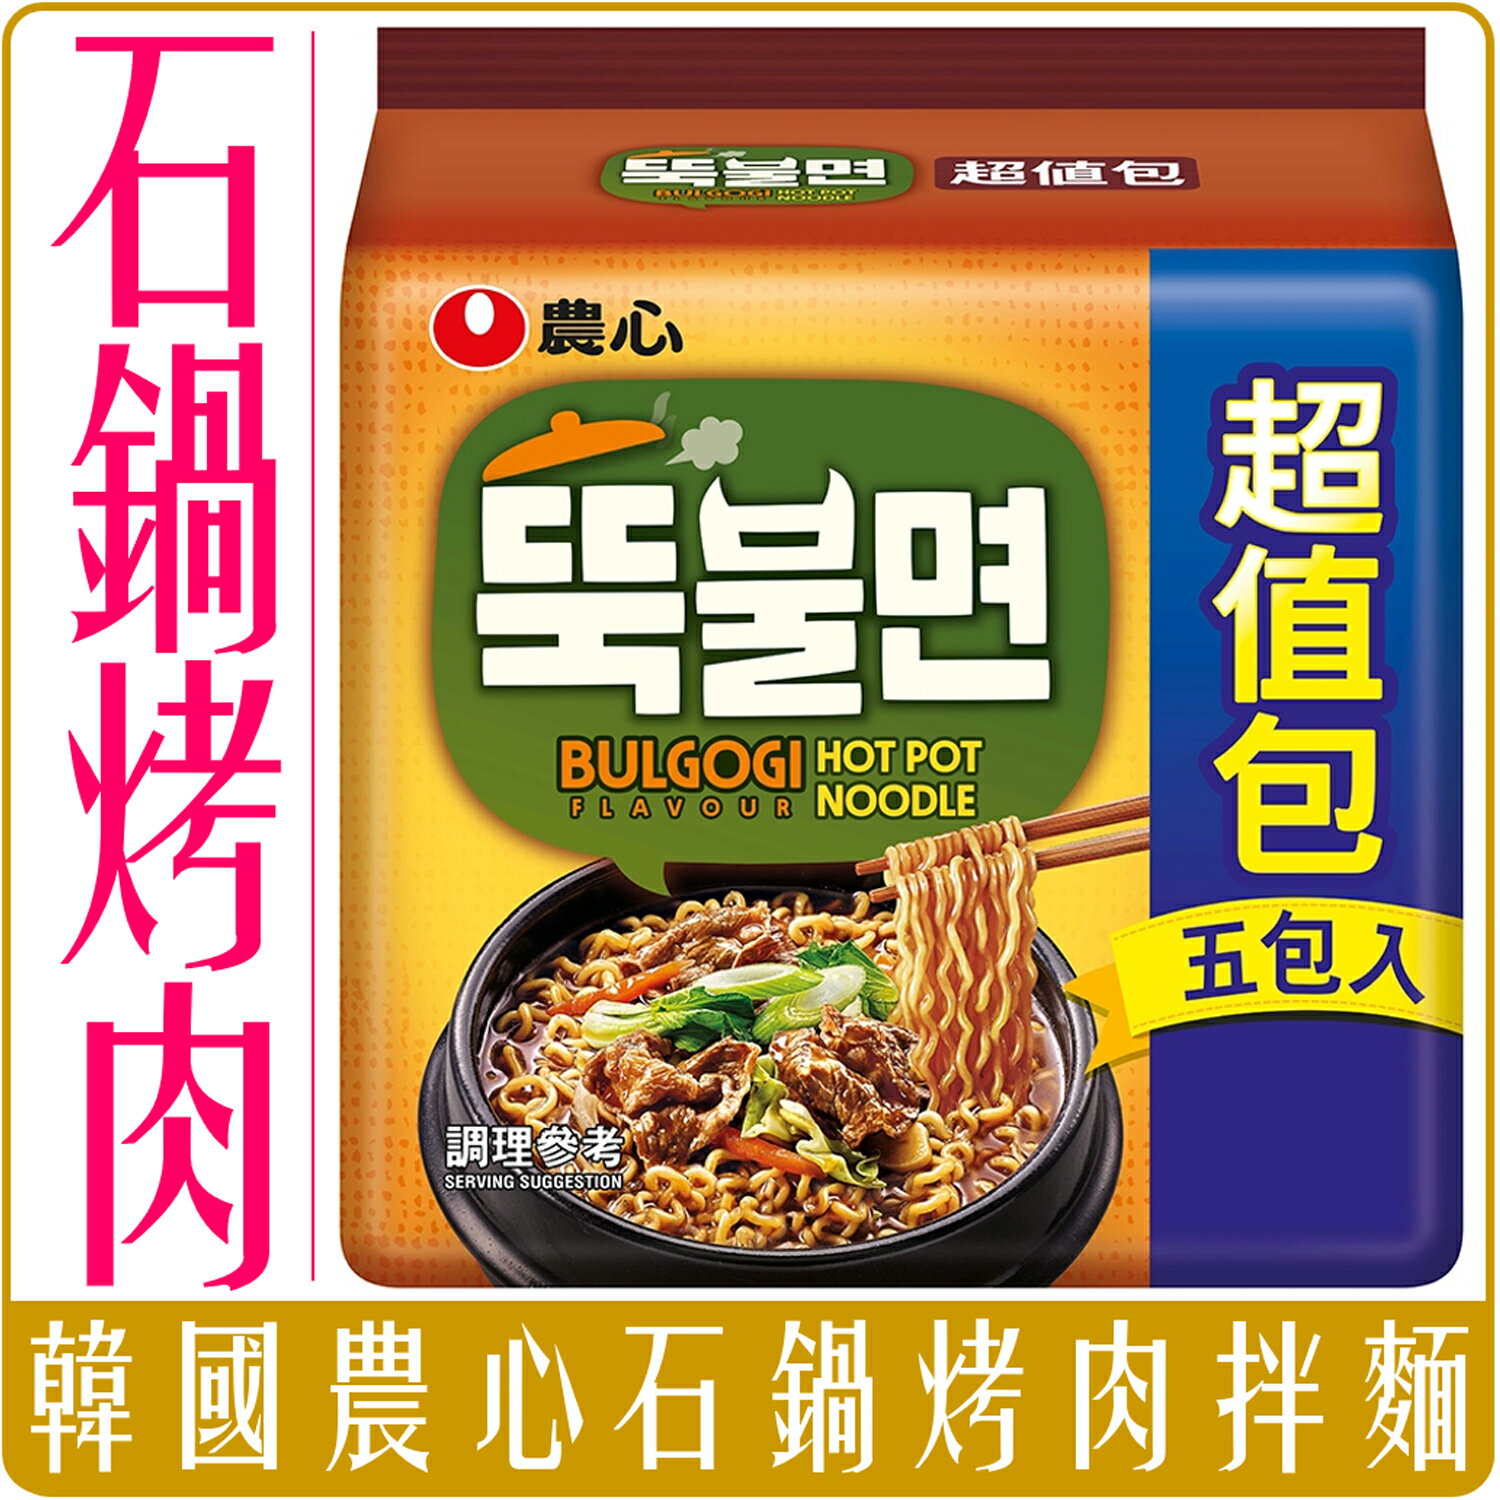 《 Chara 微百貨 》 韓國 農心 石鍋 烤肉 拌麵 拉麵 炒麵 團購 批發